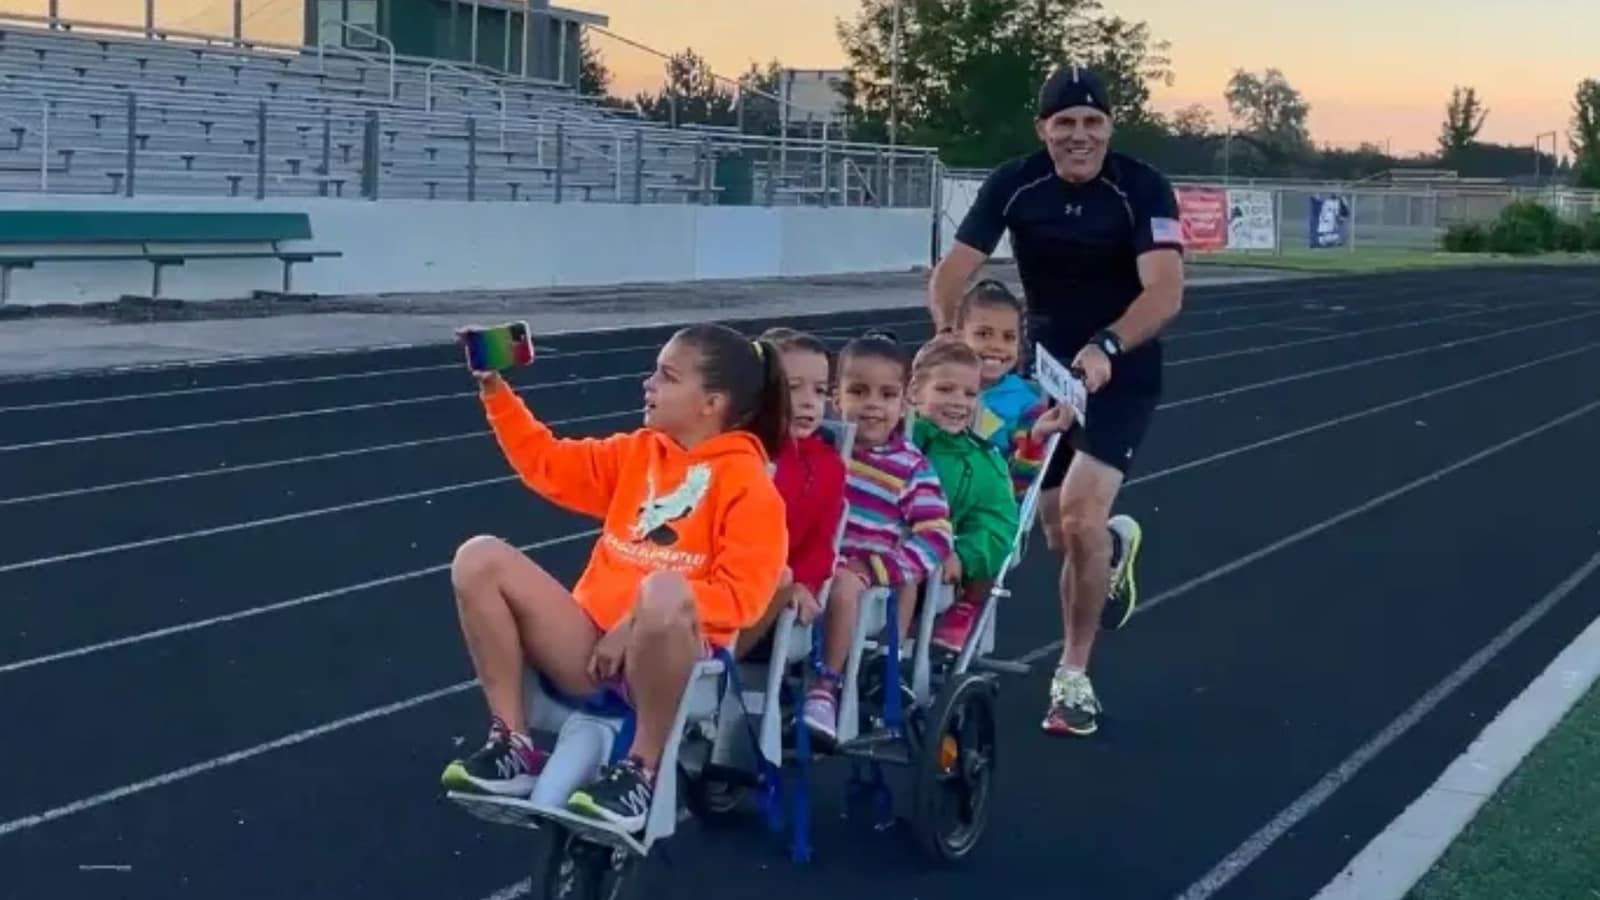 US man achieves fastest 1 km stroller push with five kids. Watch